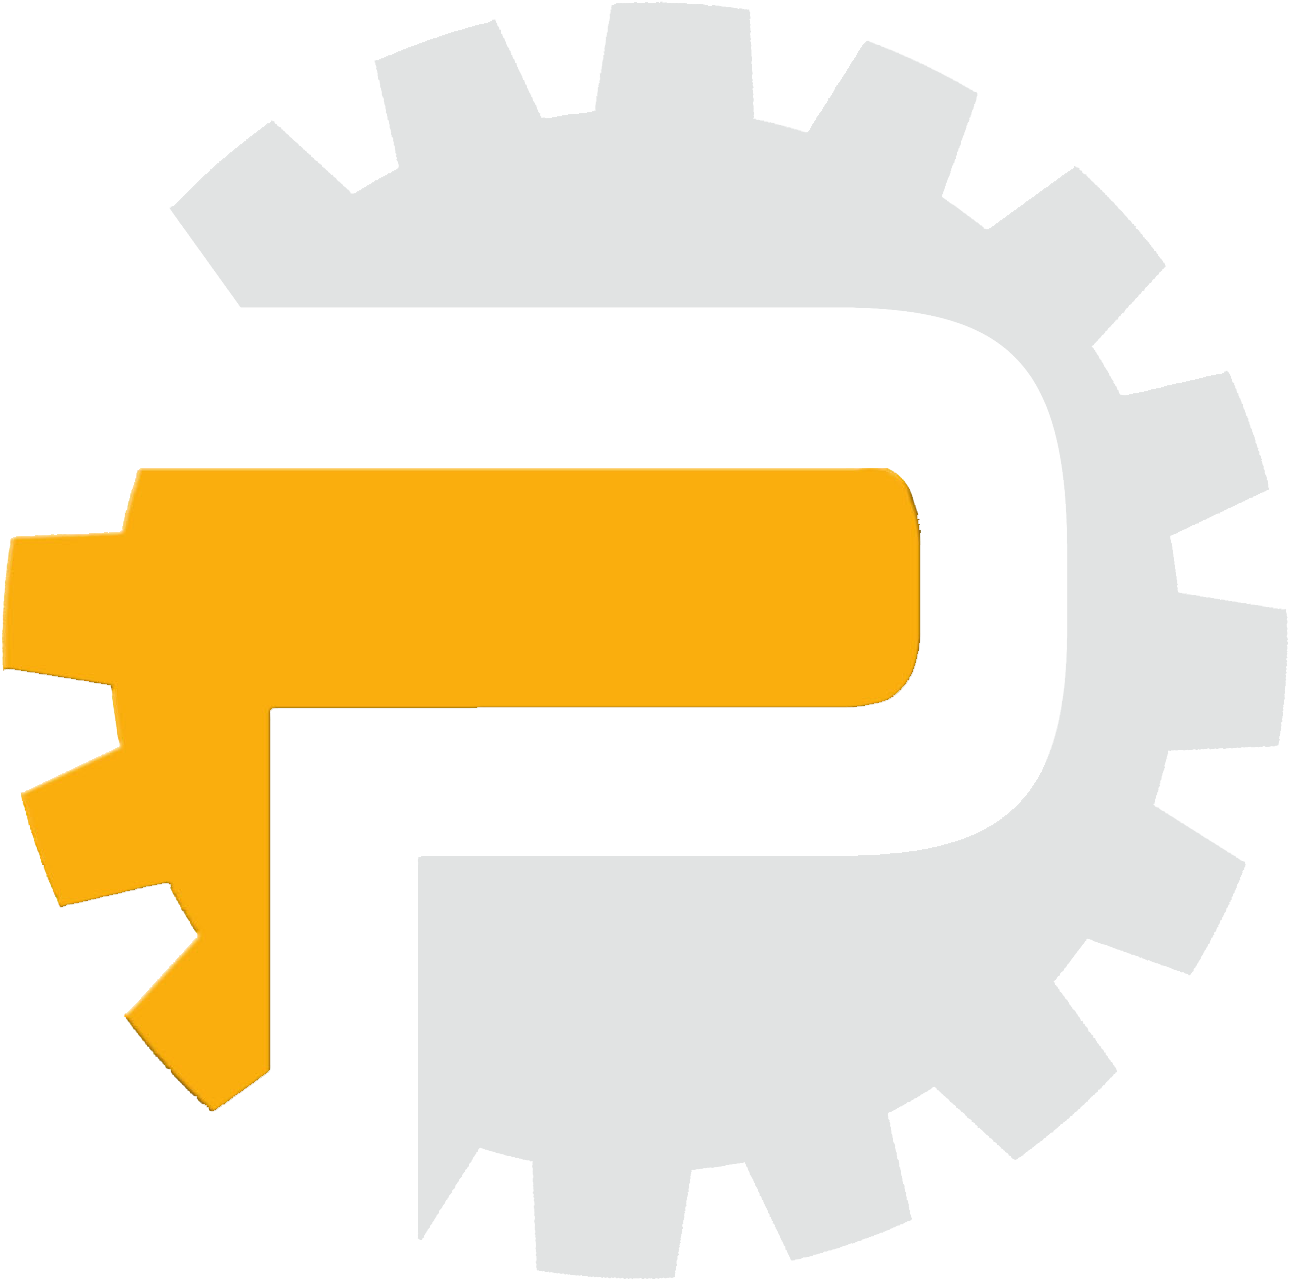 Piston Rings - Pioneer Machinery, Inc. (1436x1464)